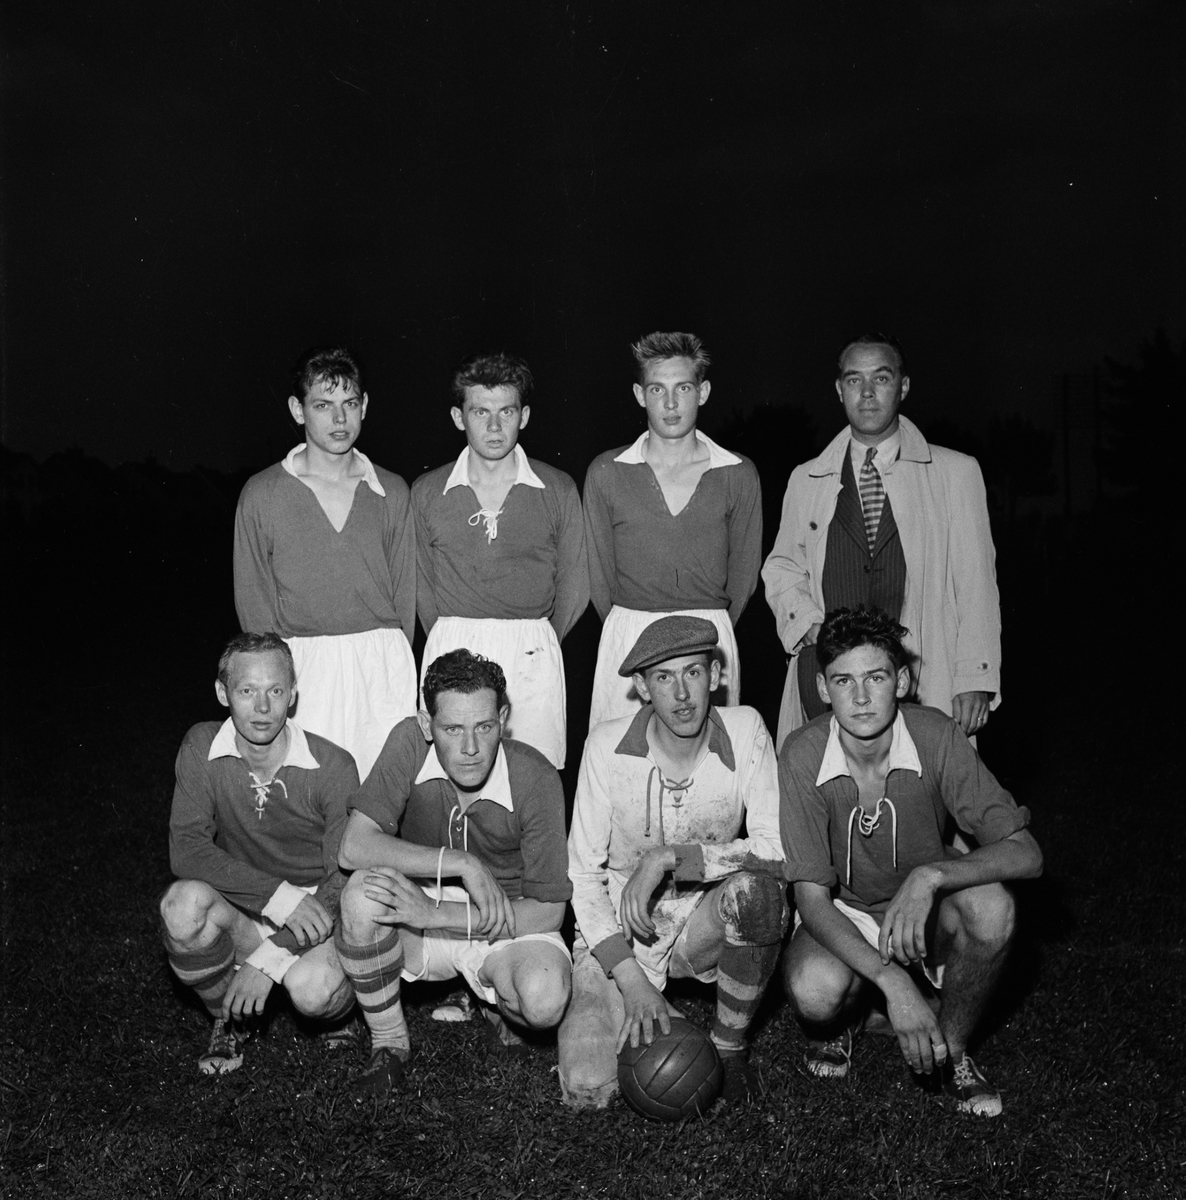 Korpfotboll, sannolikt Ekebyvallen, Flogsta, Uppsala 1954